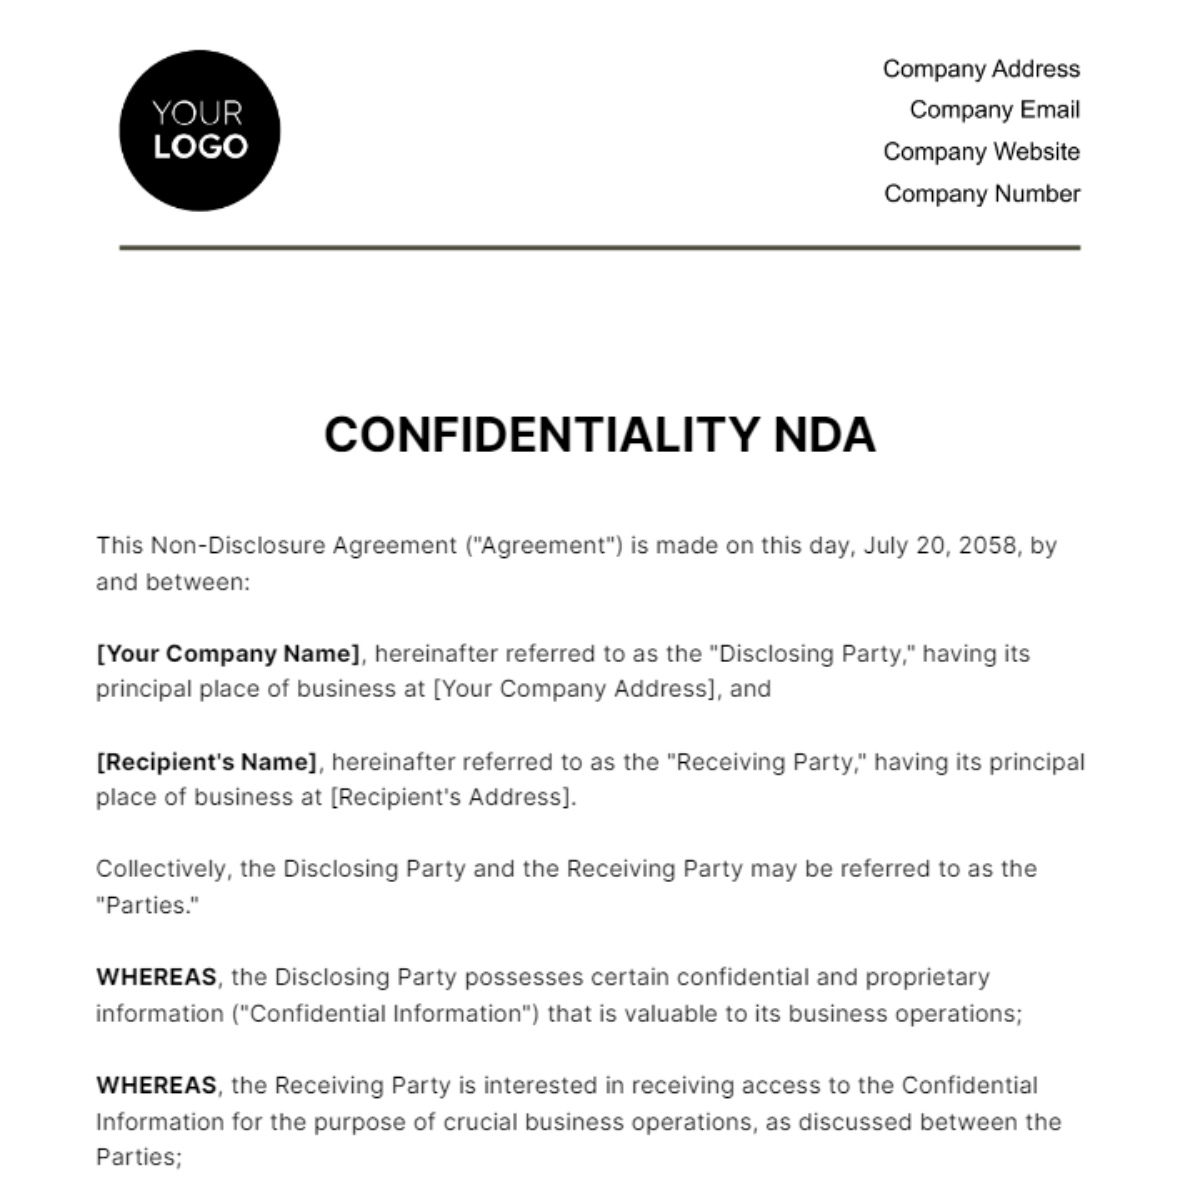 Confidentiality NDA HR Template